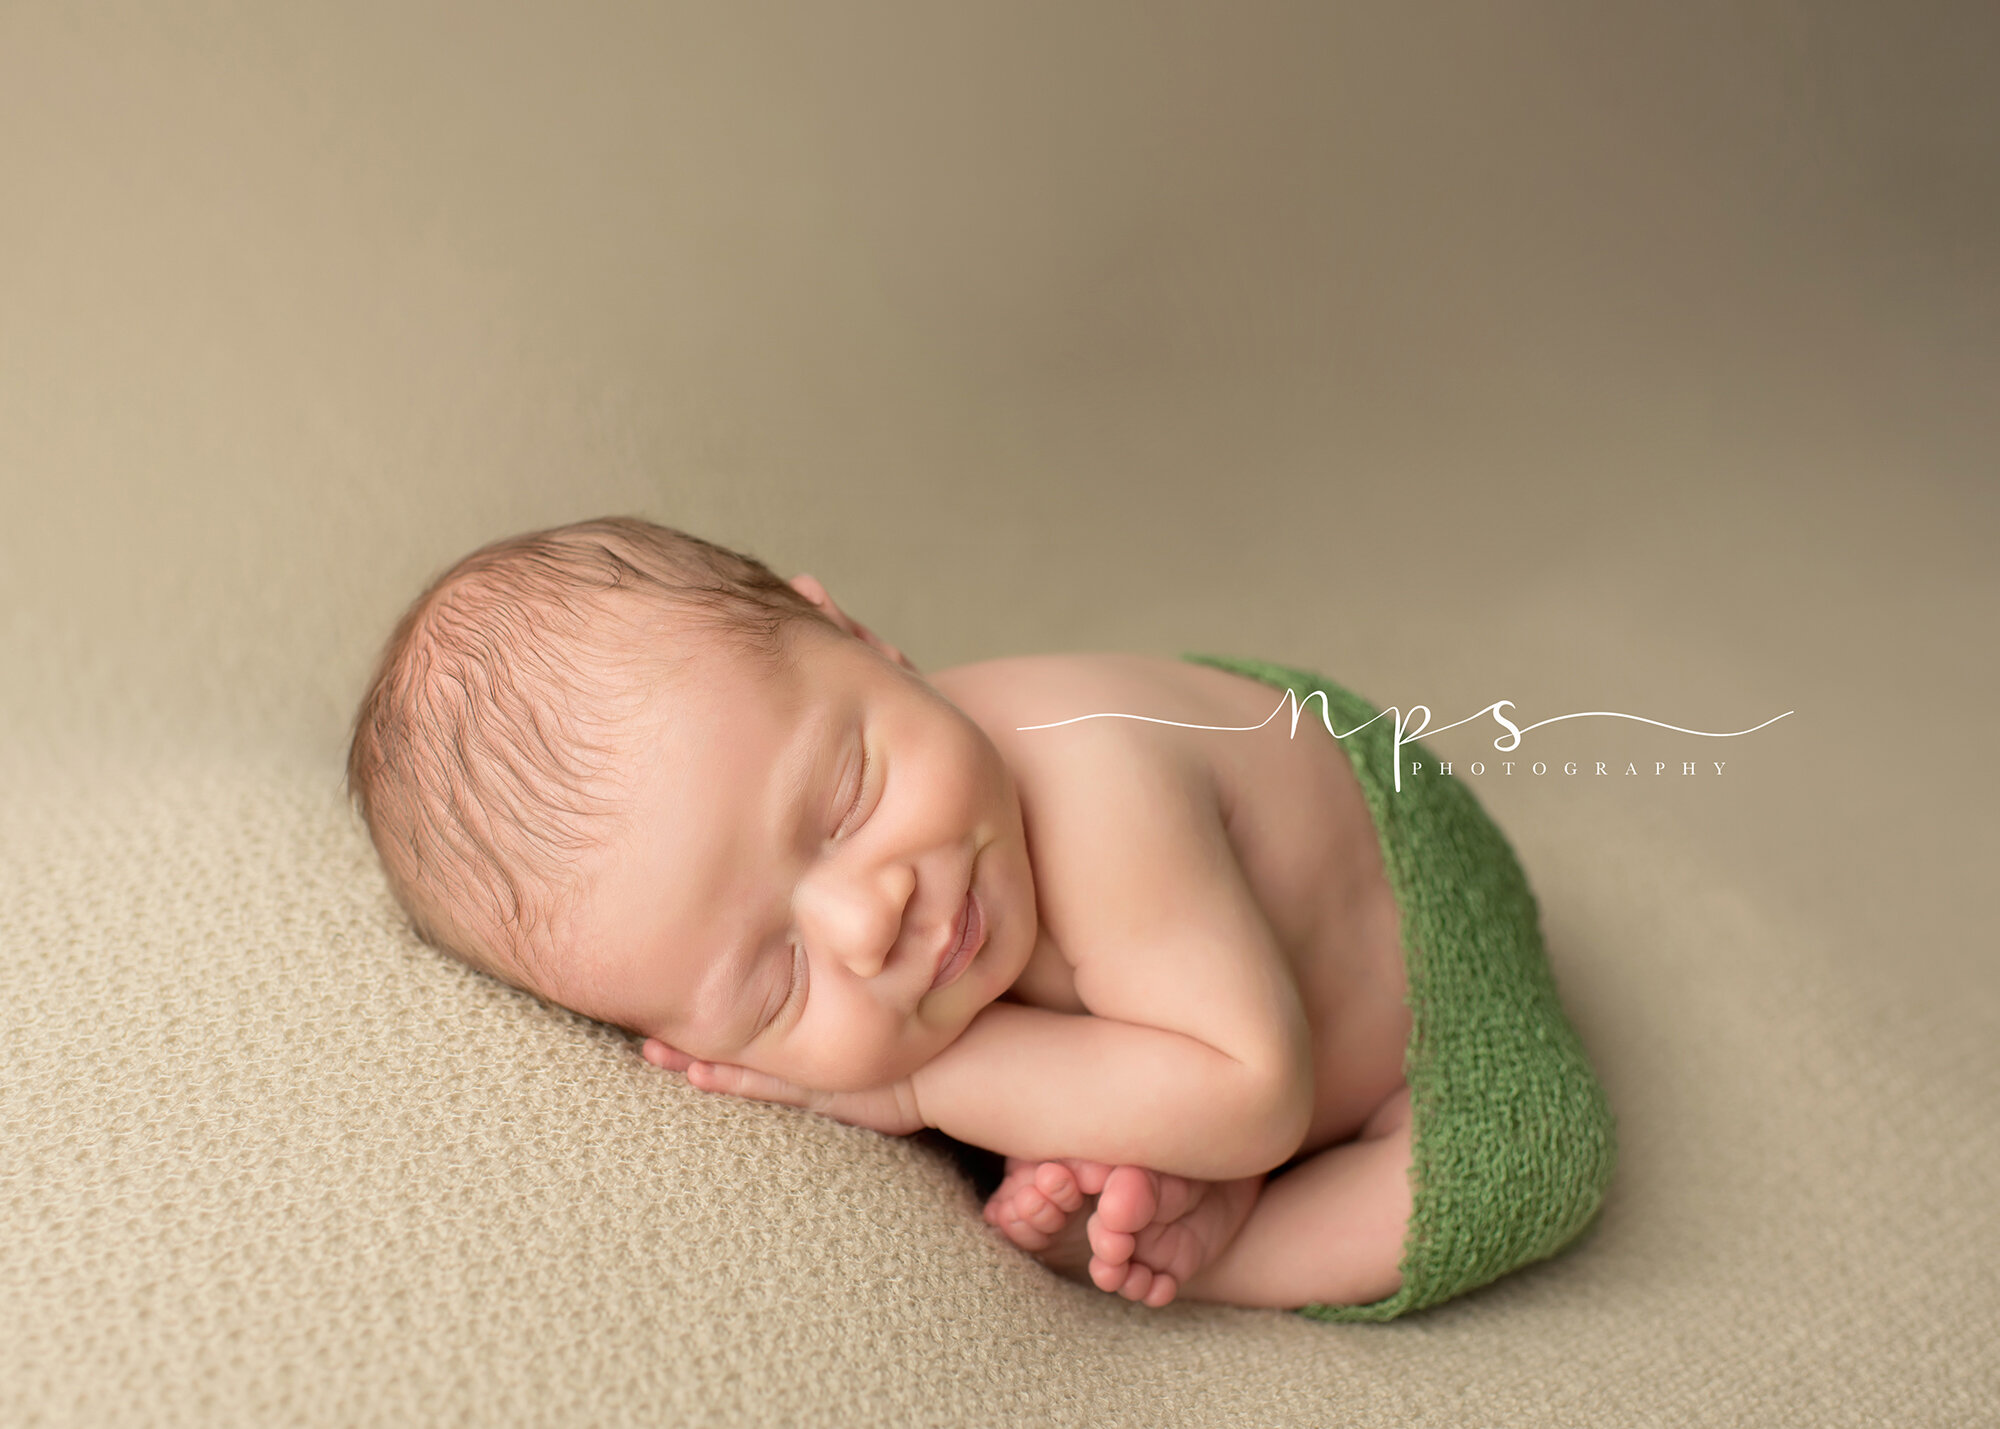 NPS-Photography-Fort Bragg Newborn Photographer-Baby-L-002